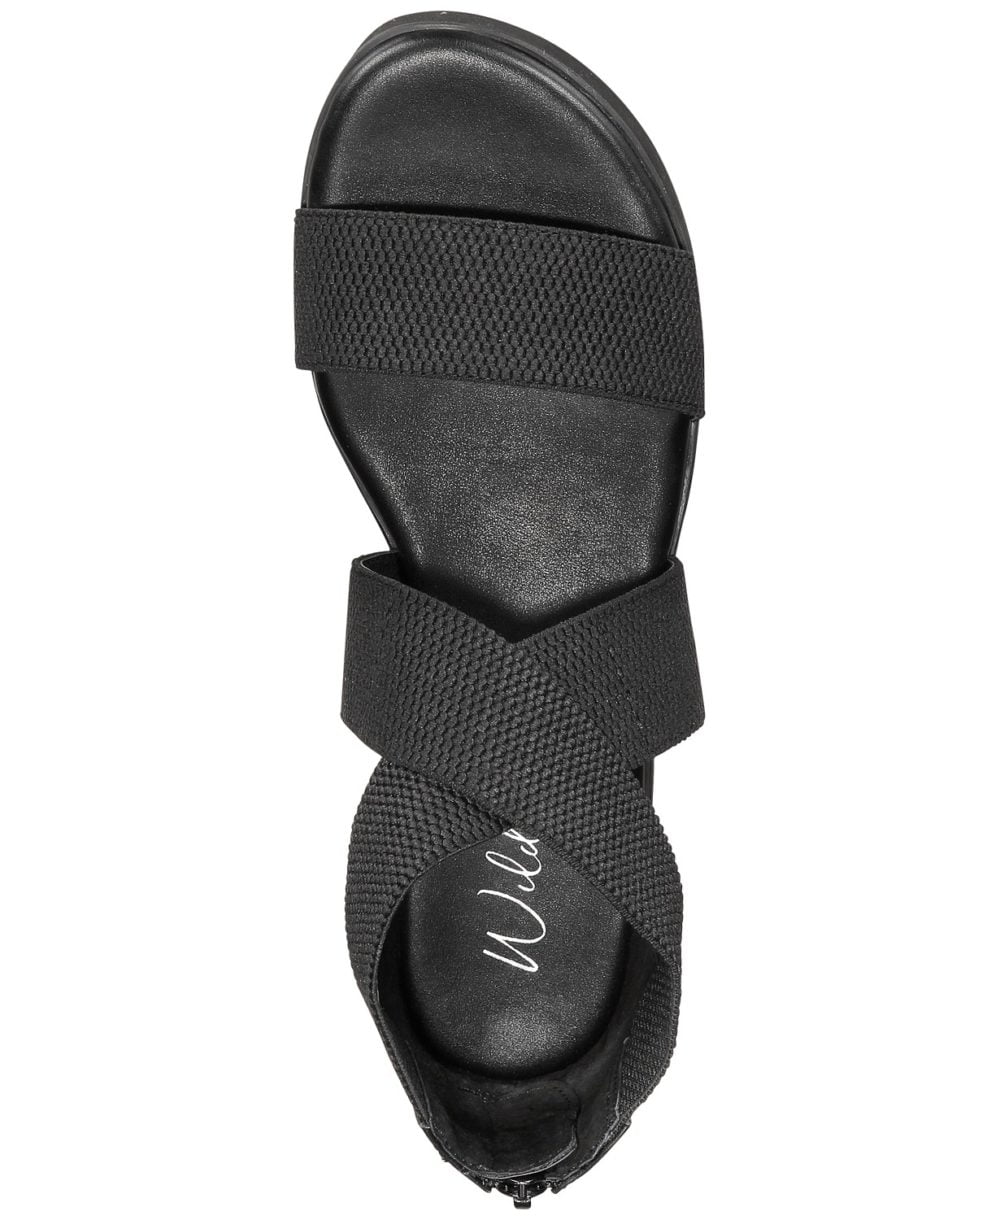 www.couturepoint.com-wild-pair-womens-black-samara-platform-sandals